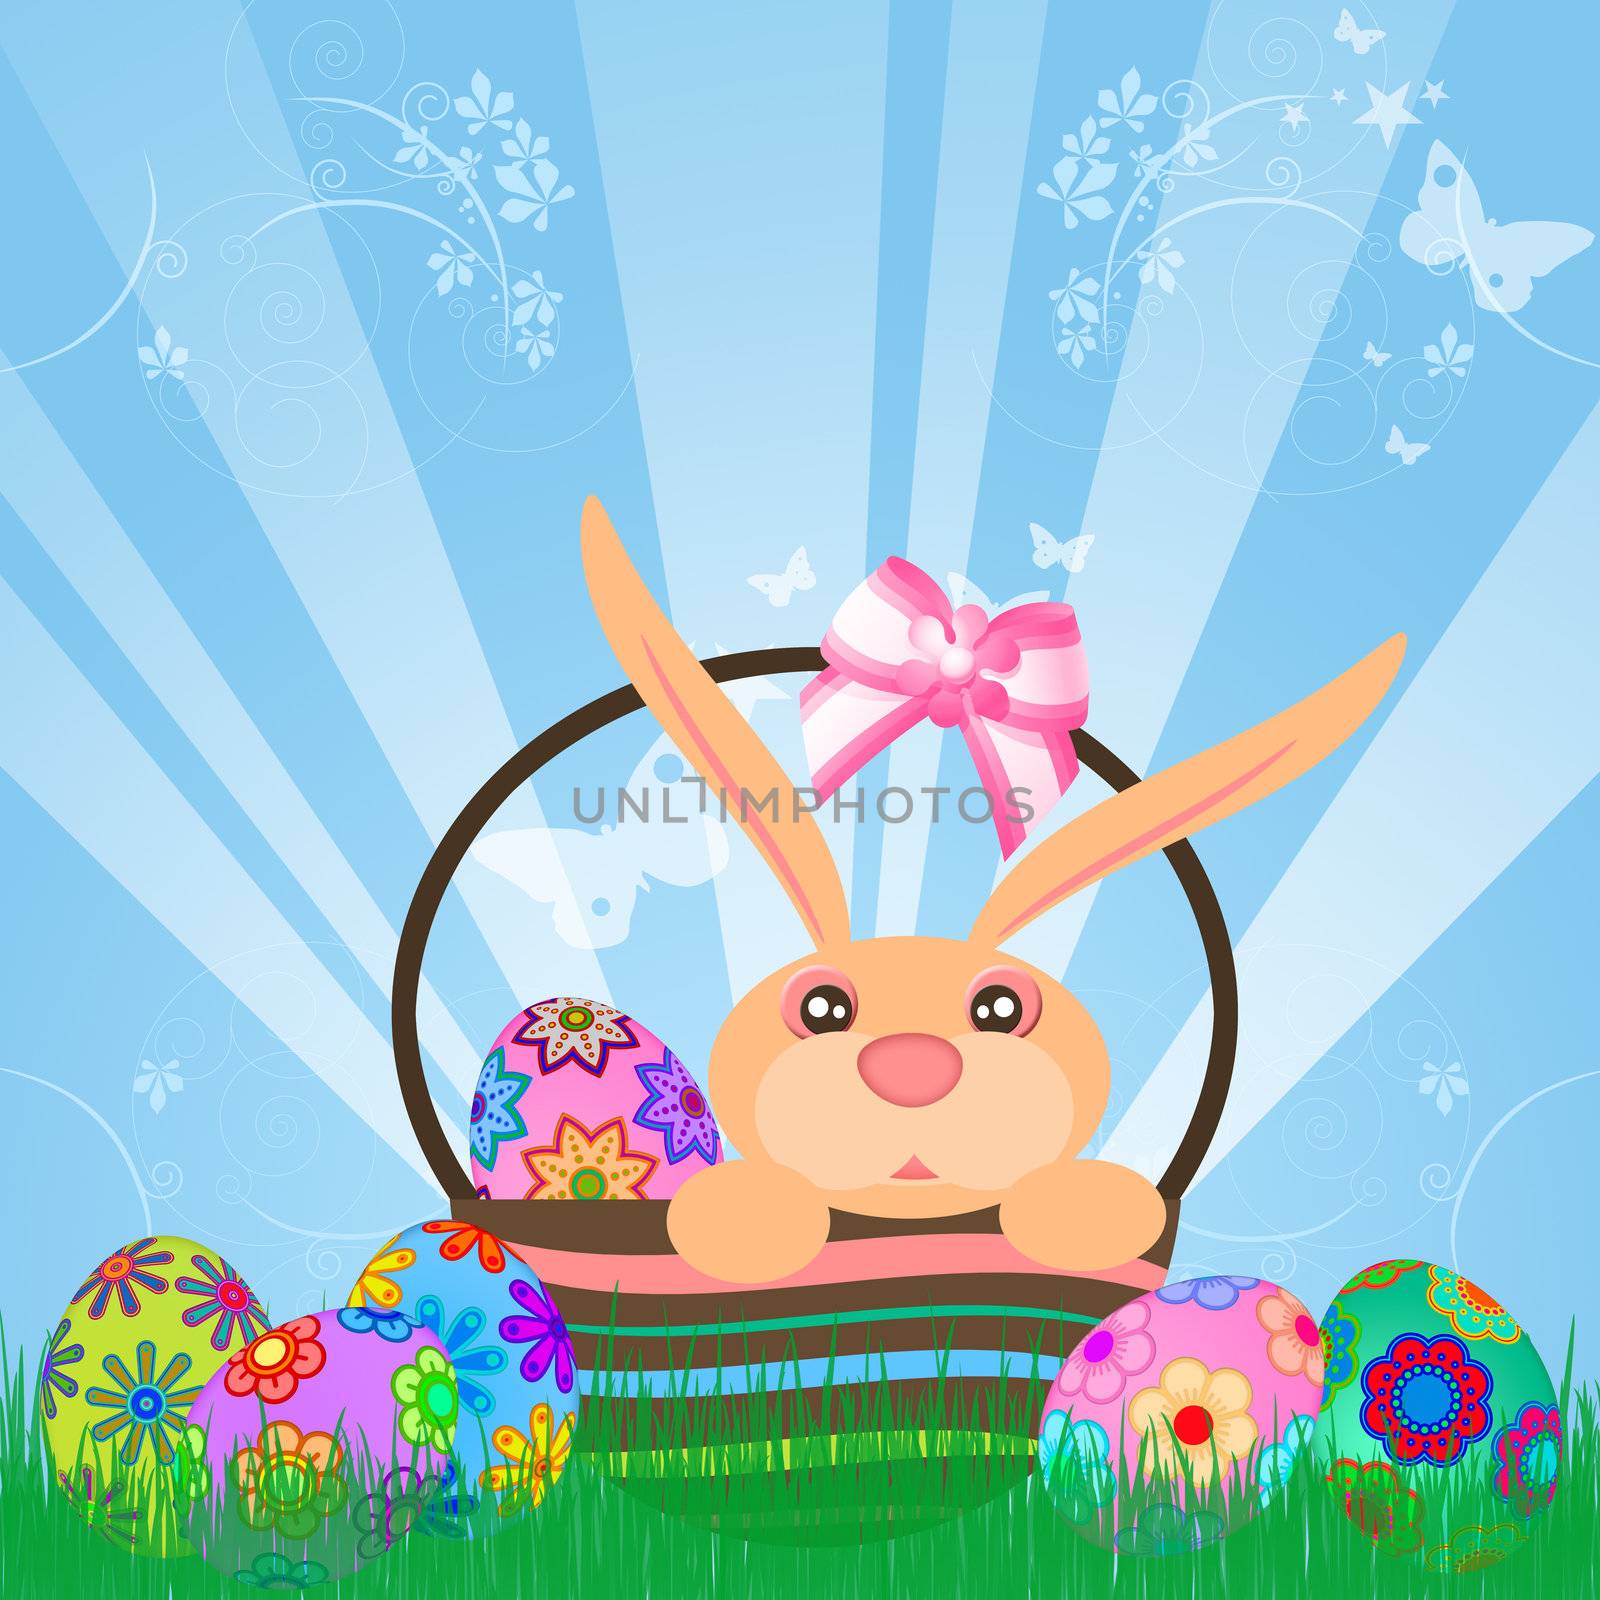 Easter Eggs Bunny Rabbit in Basket Floral Design Sky Rays Grass Illustration